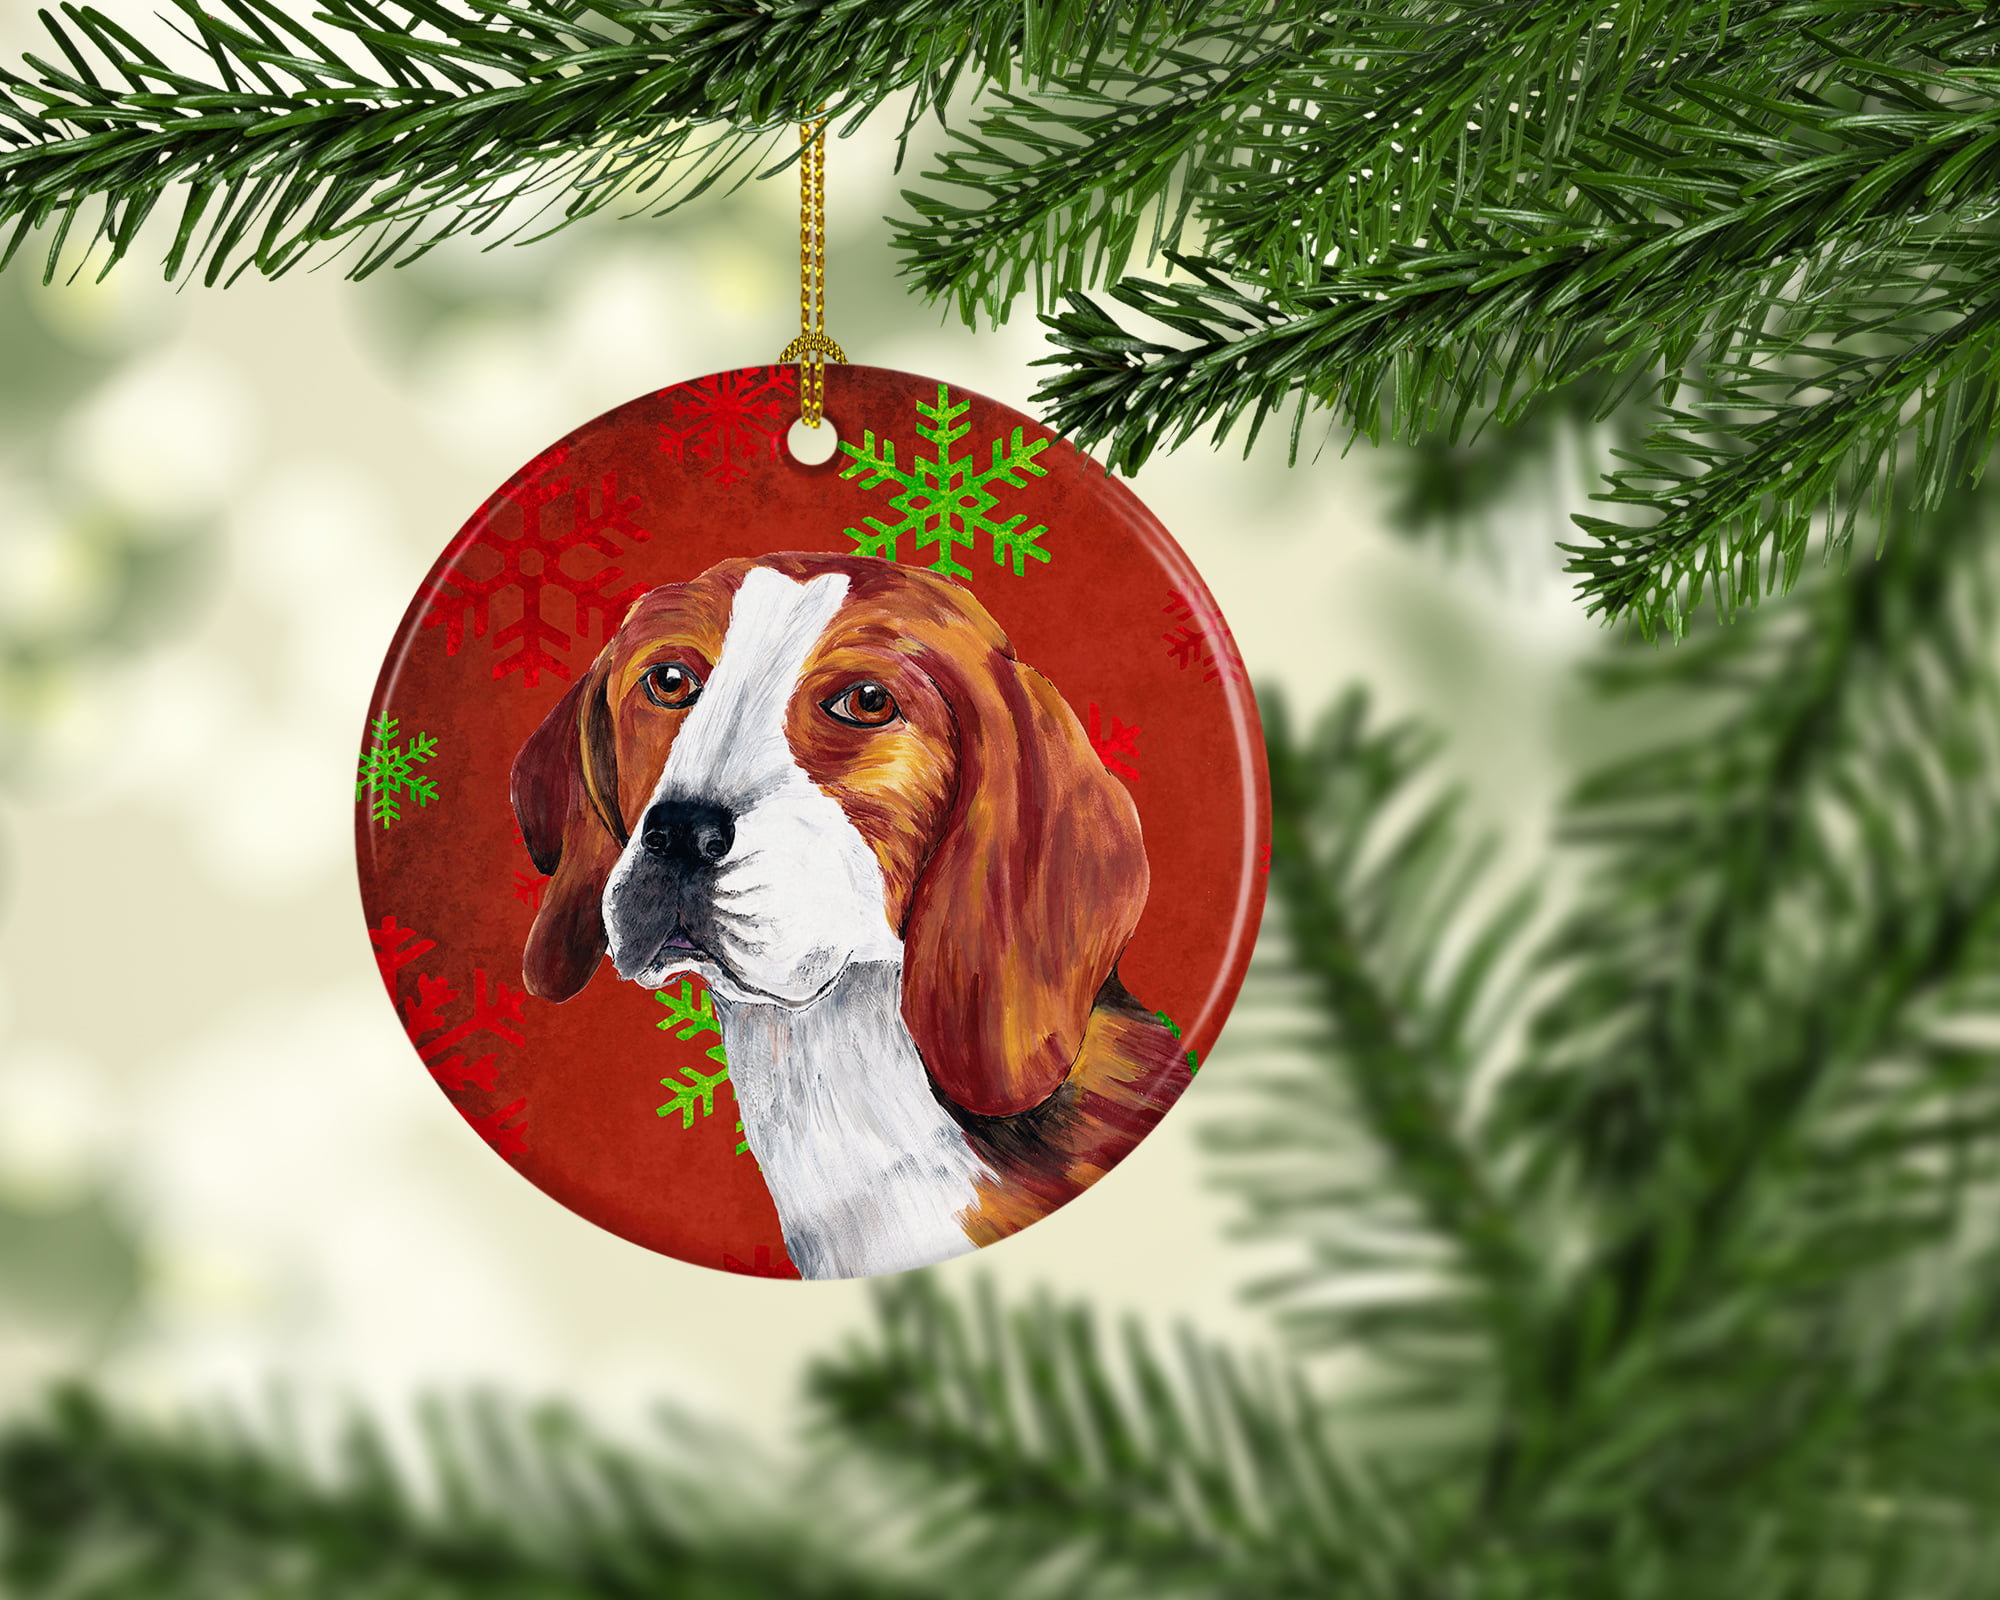 Three's Company The Regal Beagle Snowflake lit Holiday Christmas Tree Ornament 